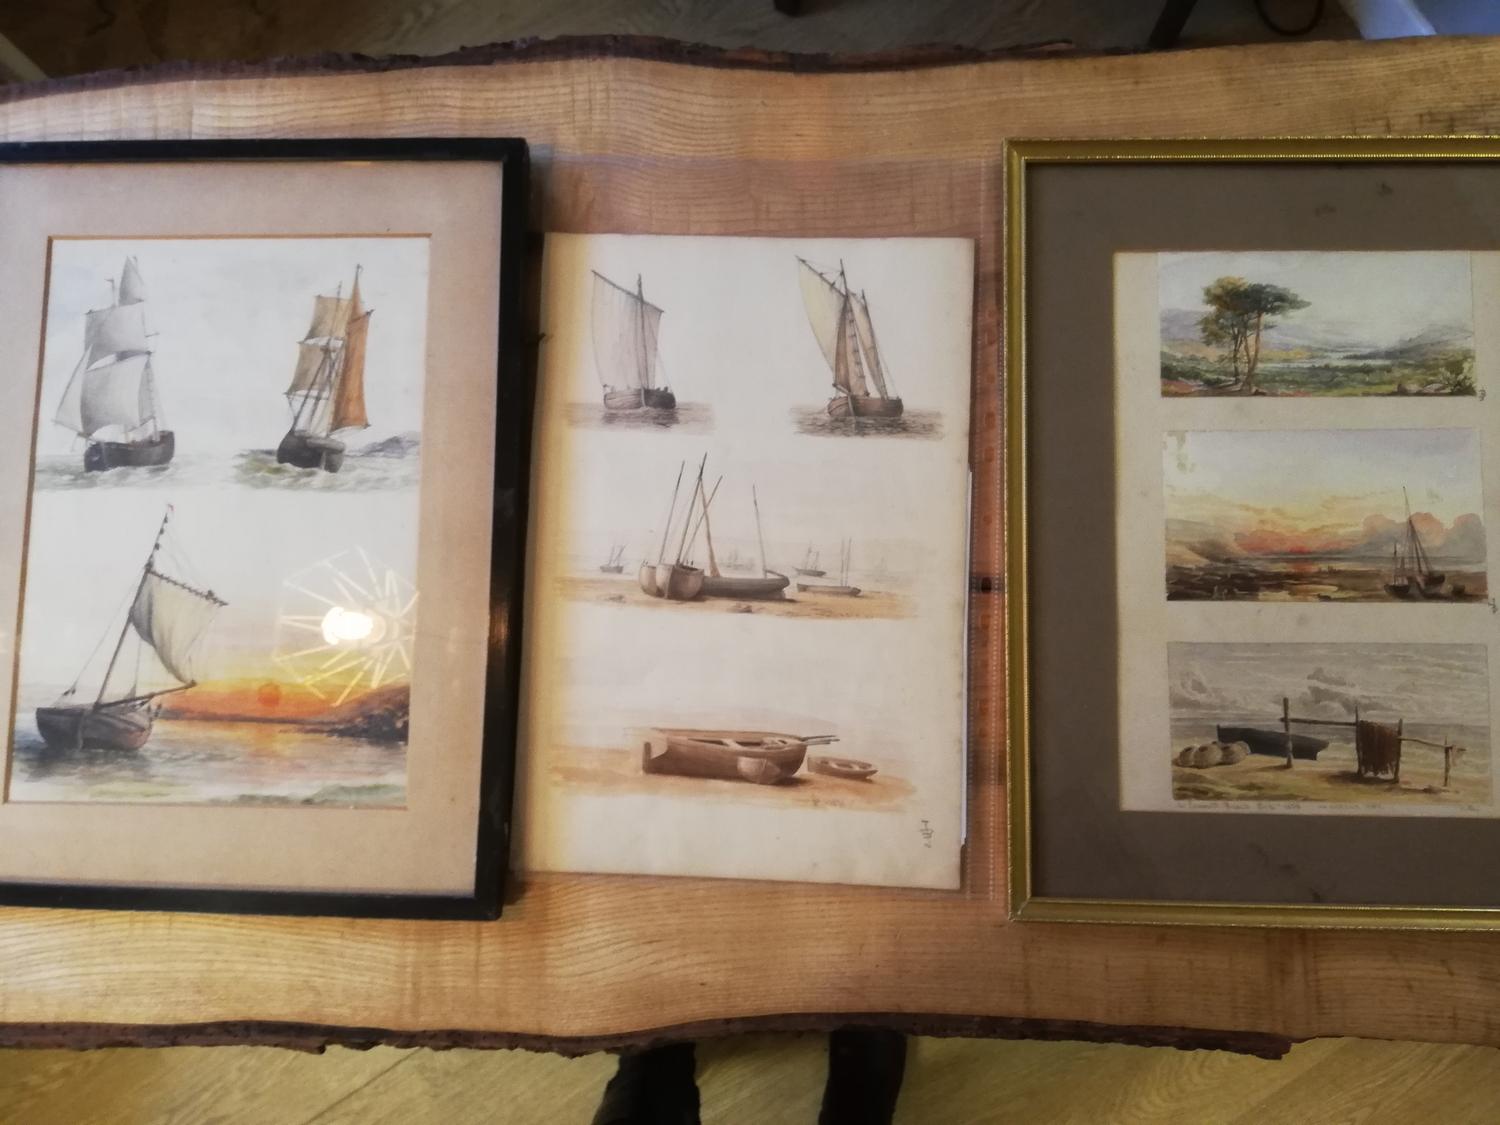 3 x watercolours by John Barret -sizes 38cm x 25cm, 44cm x 34cm & 45cm x 35cm